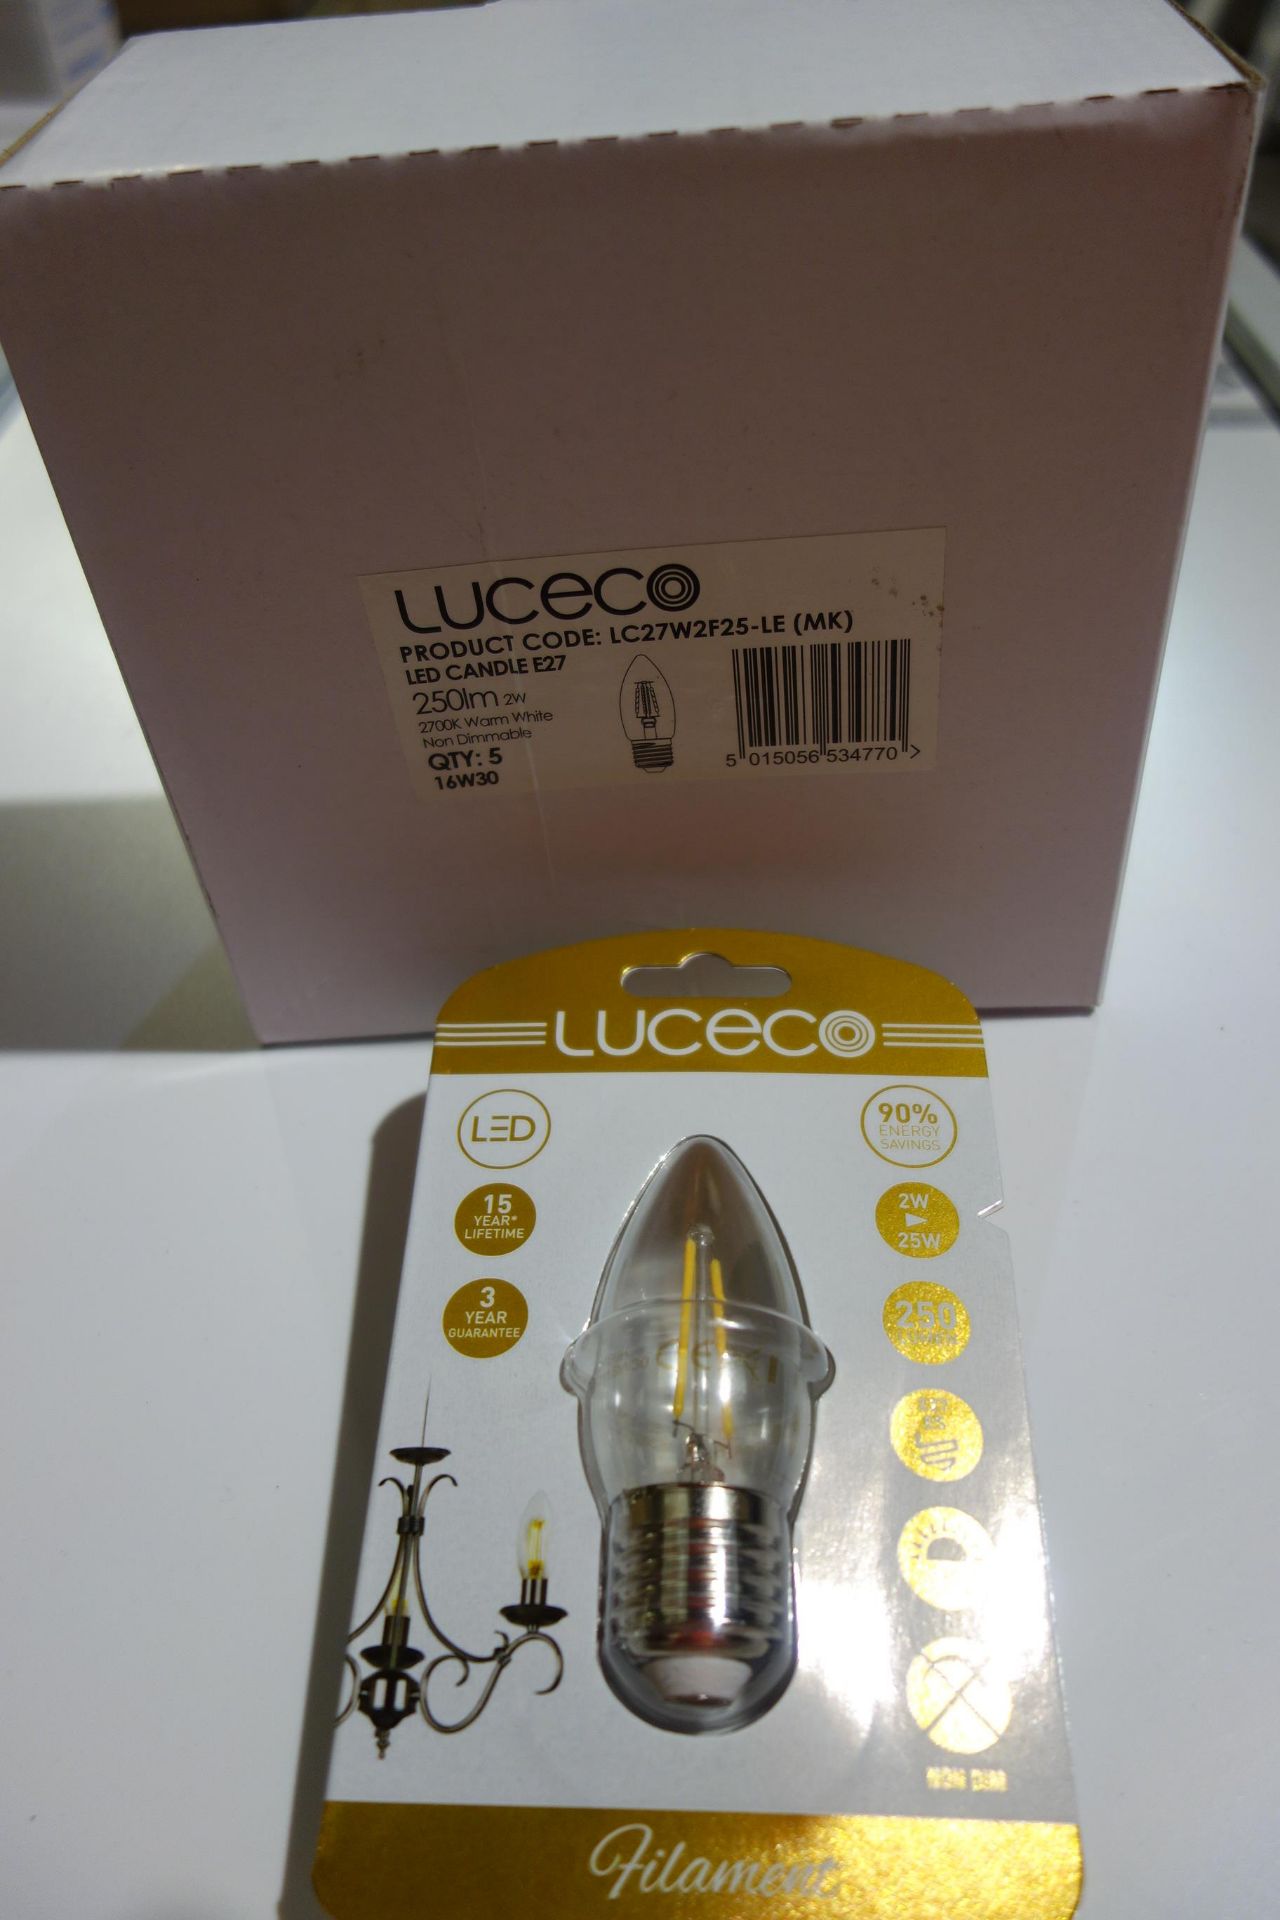 100 X Luceco LC27W2F25-LE MK LED 2W Candle Lamp E27 Fitting 250 Lumens